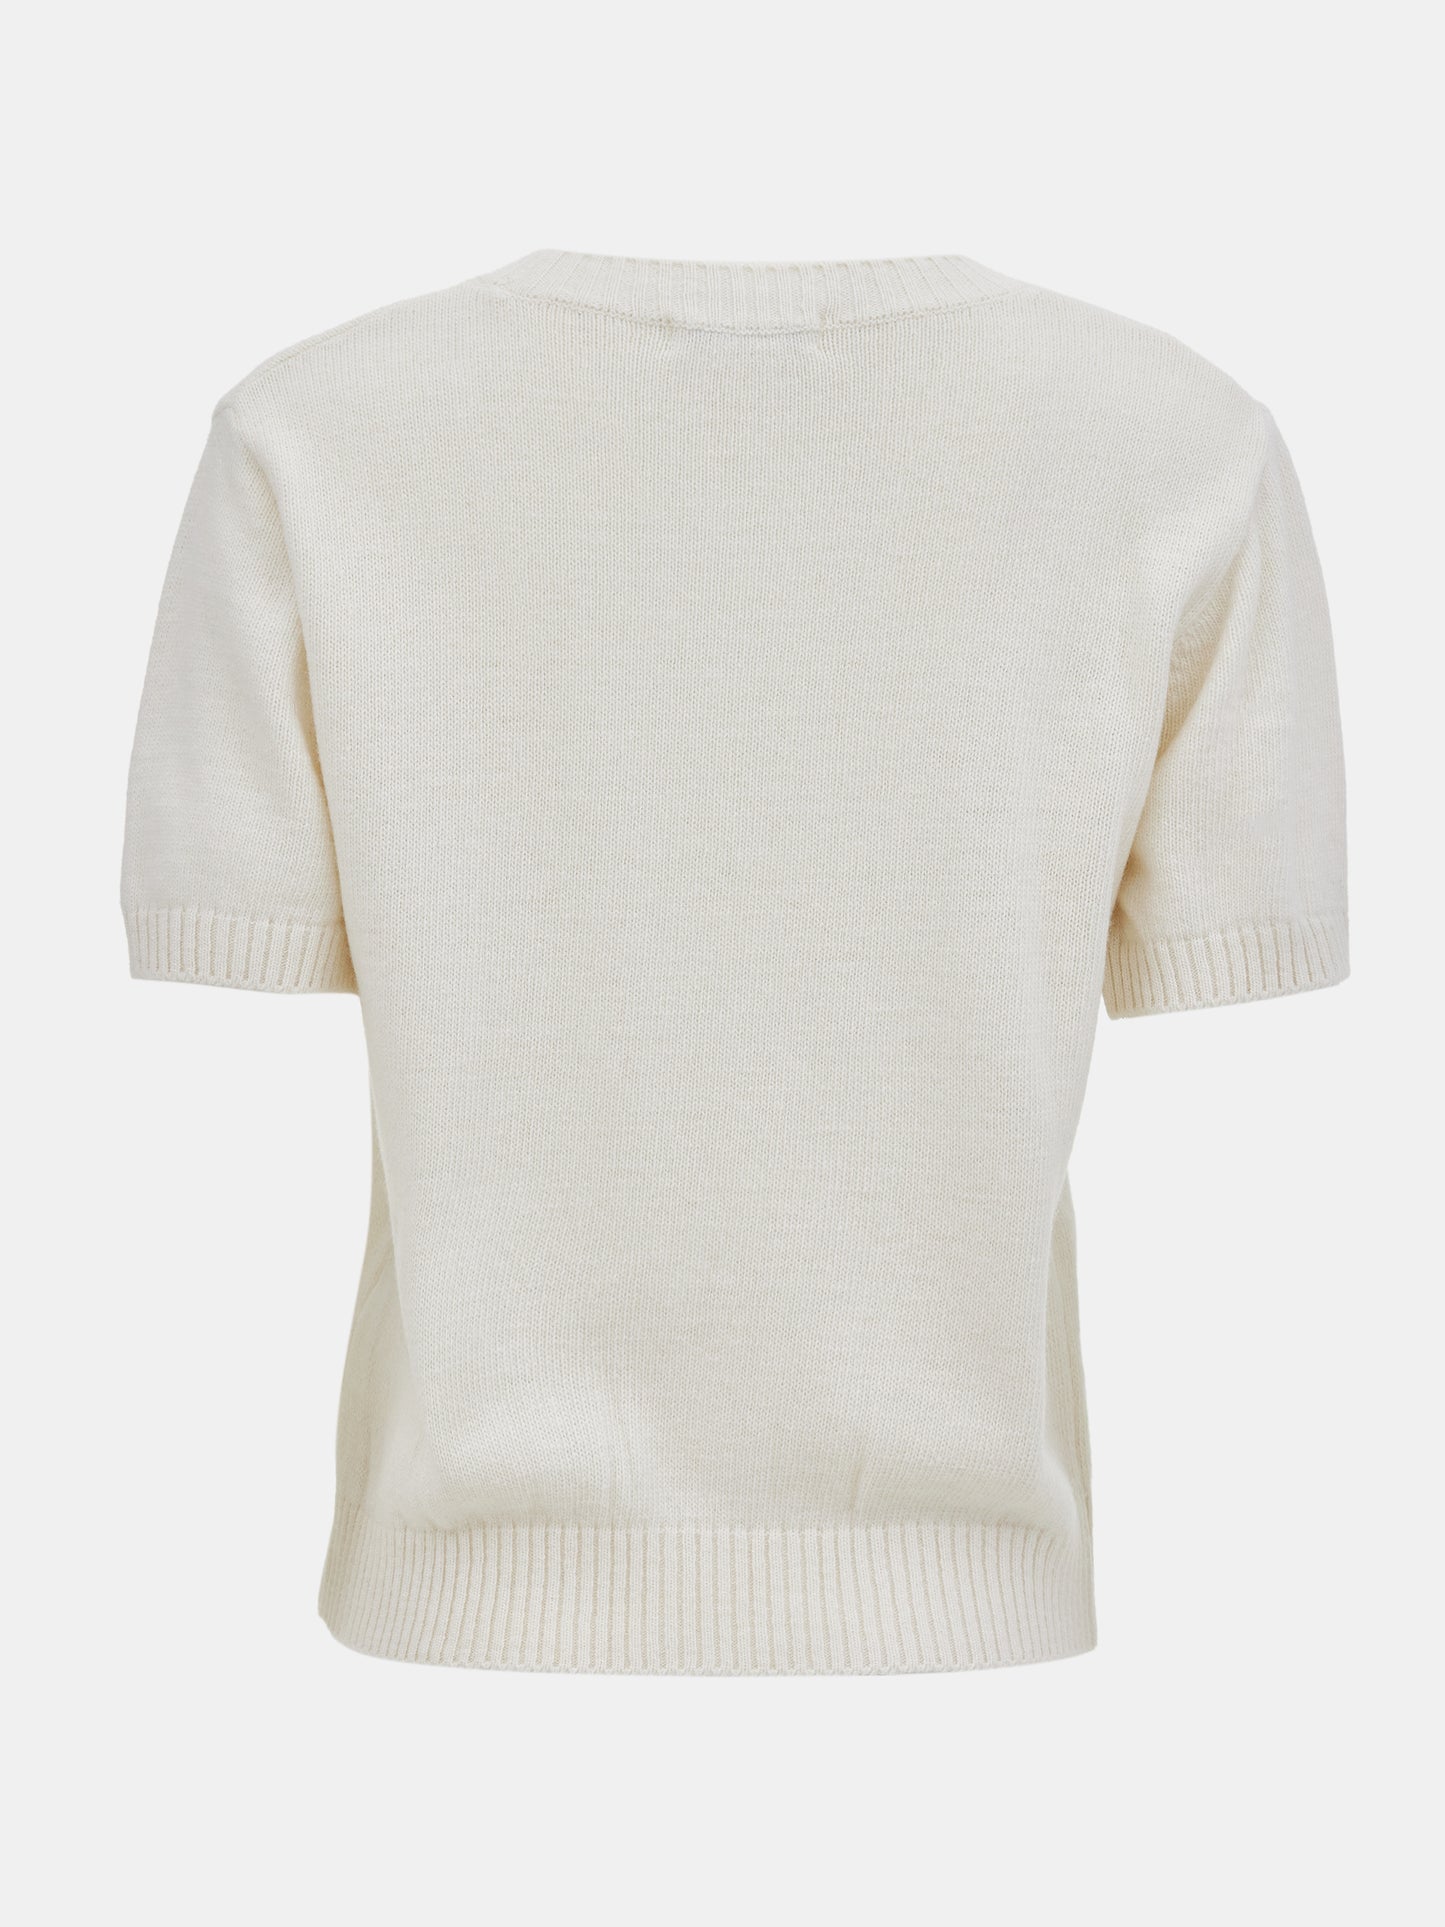 Two-Piece Cashmere Knit Set, White Melange